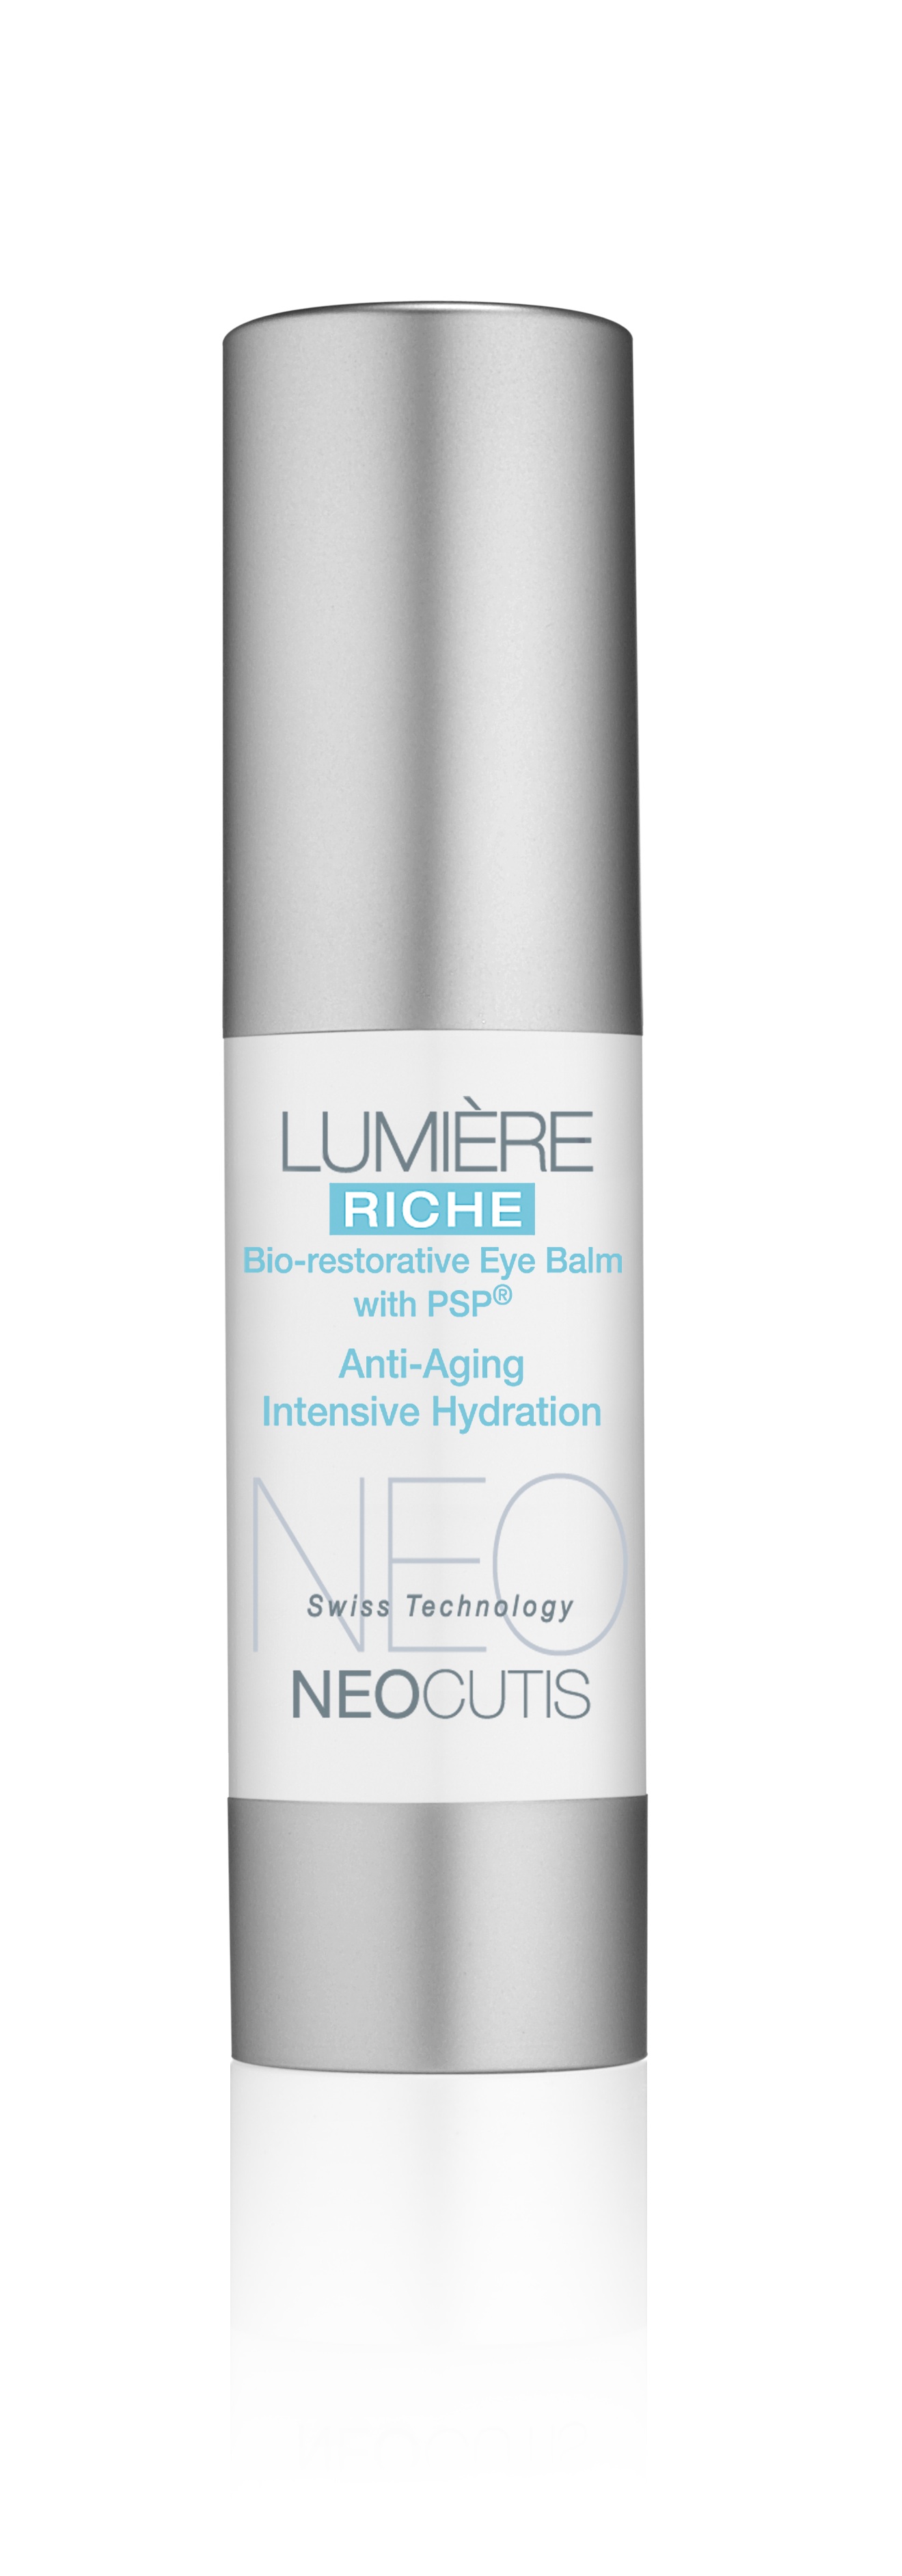 NeoCutis Lumiere Riche Bio-restorative Eye Balm with PSP